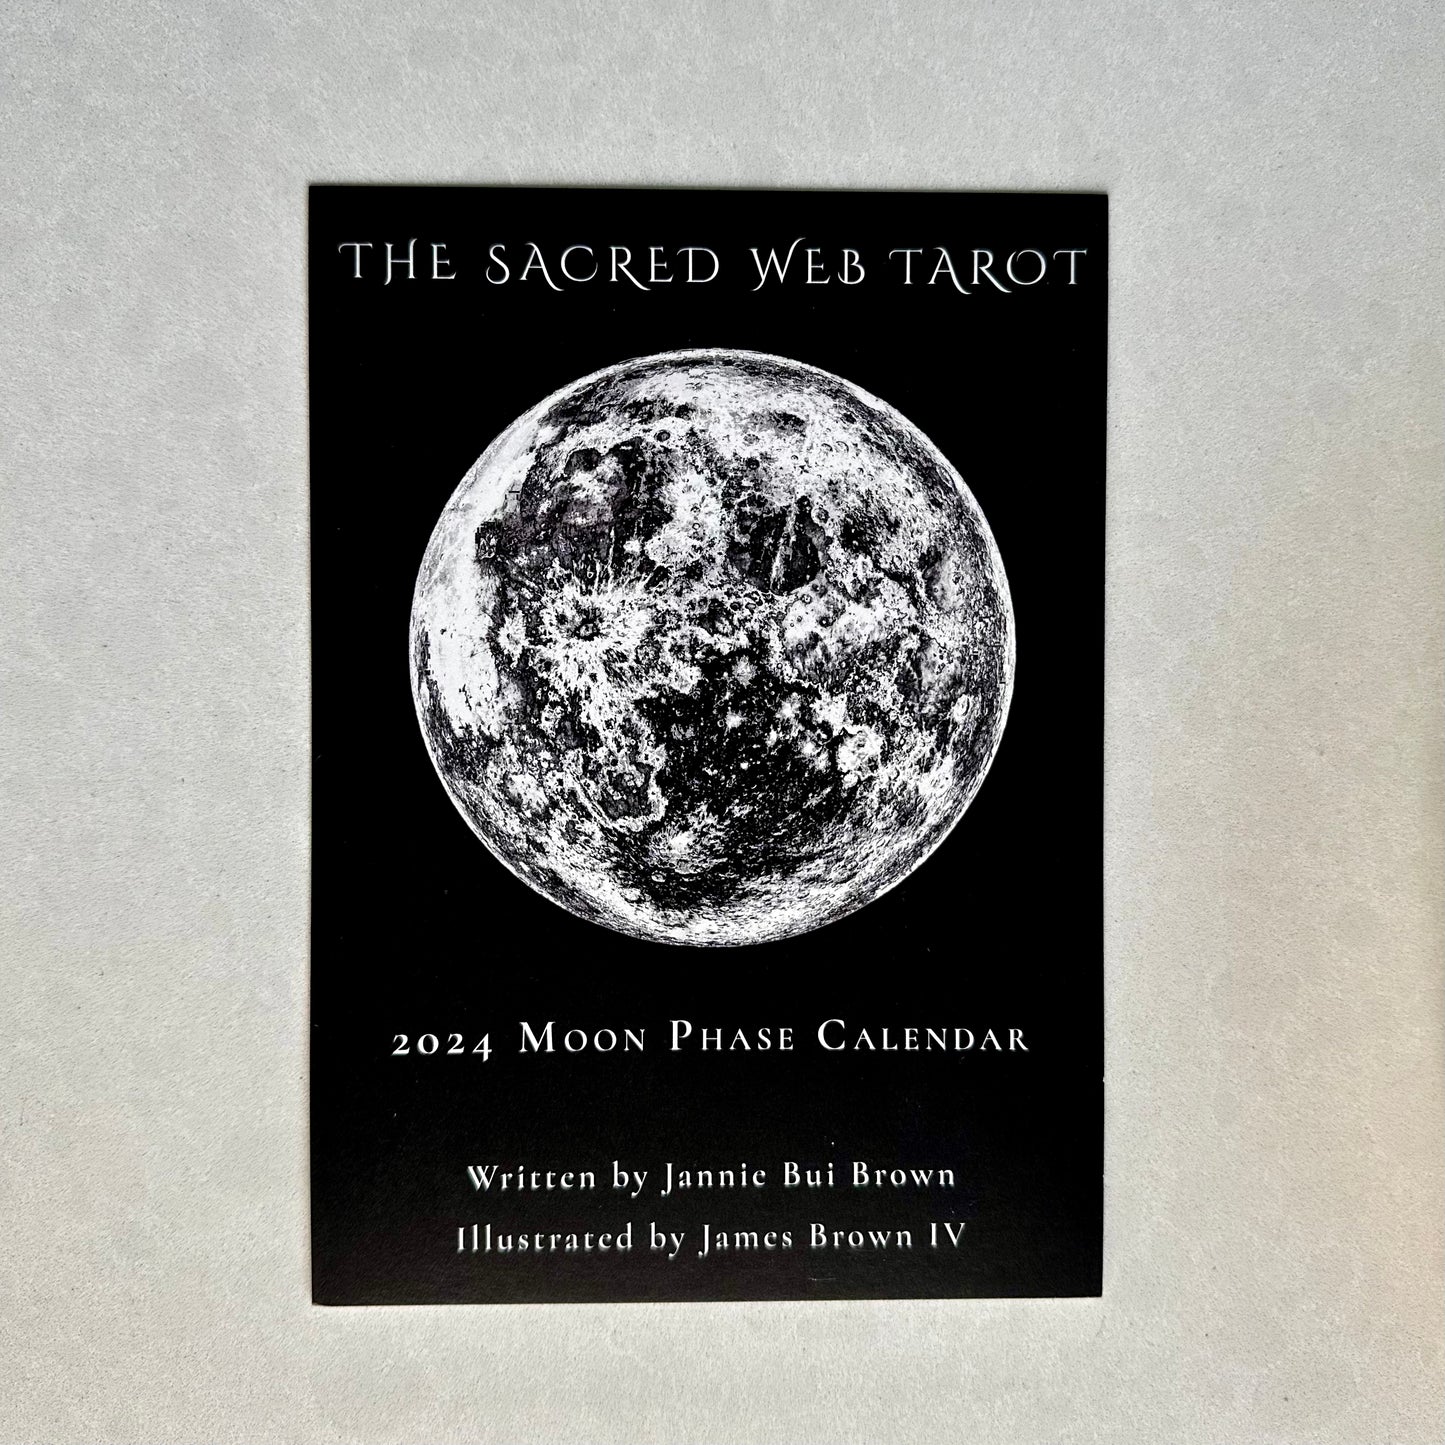 The Sacred Web Tarot 2024 Moon Phase Calendar and Easel